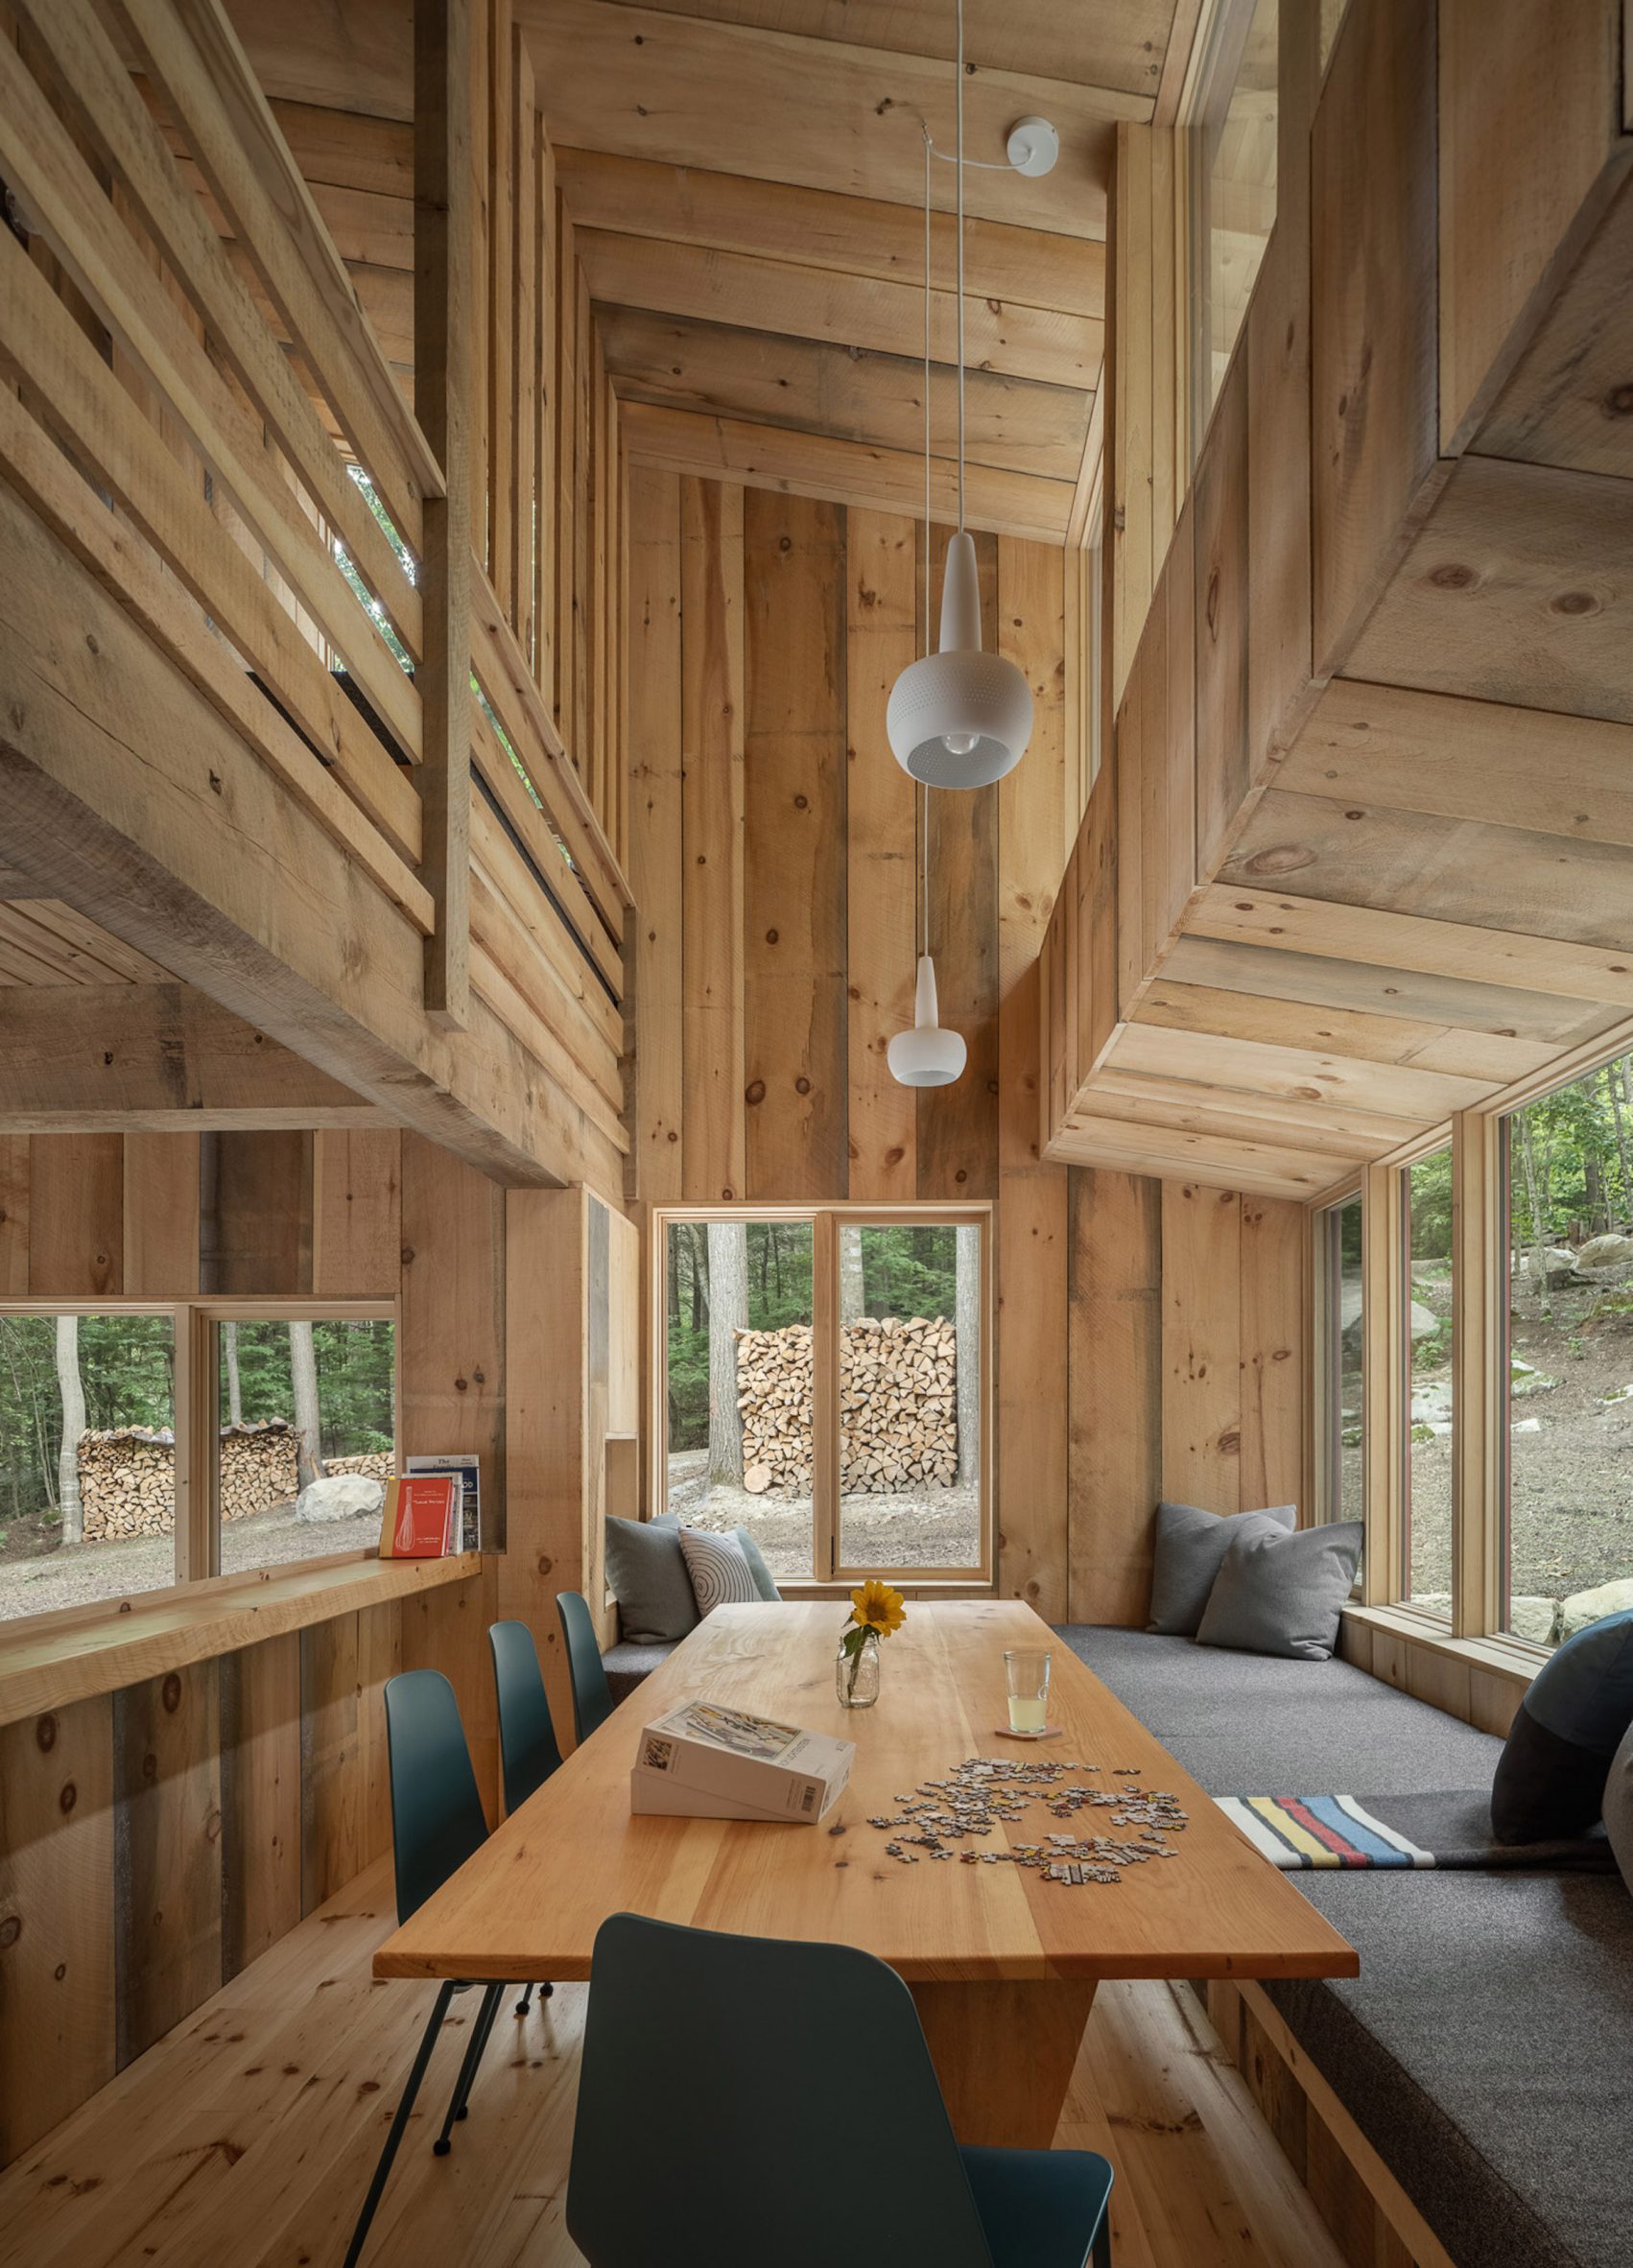 Cedar interiors in Maine modern cabin